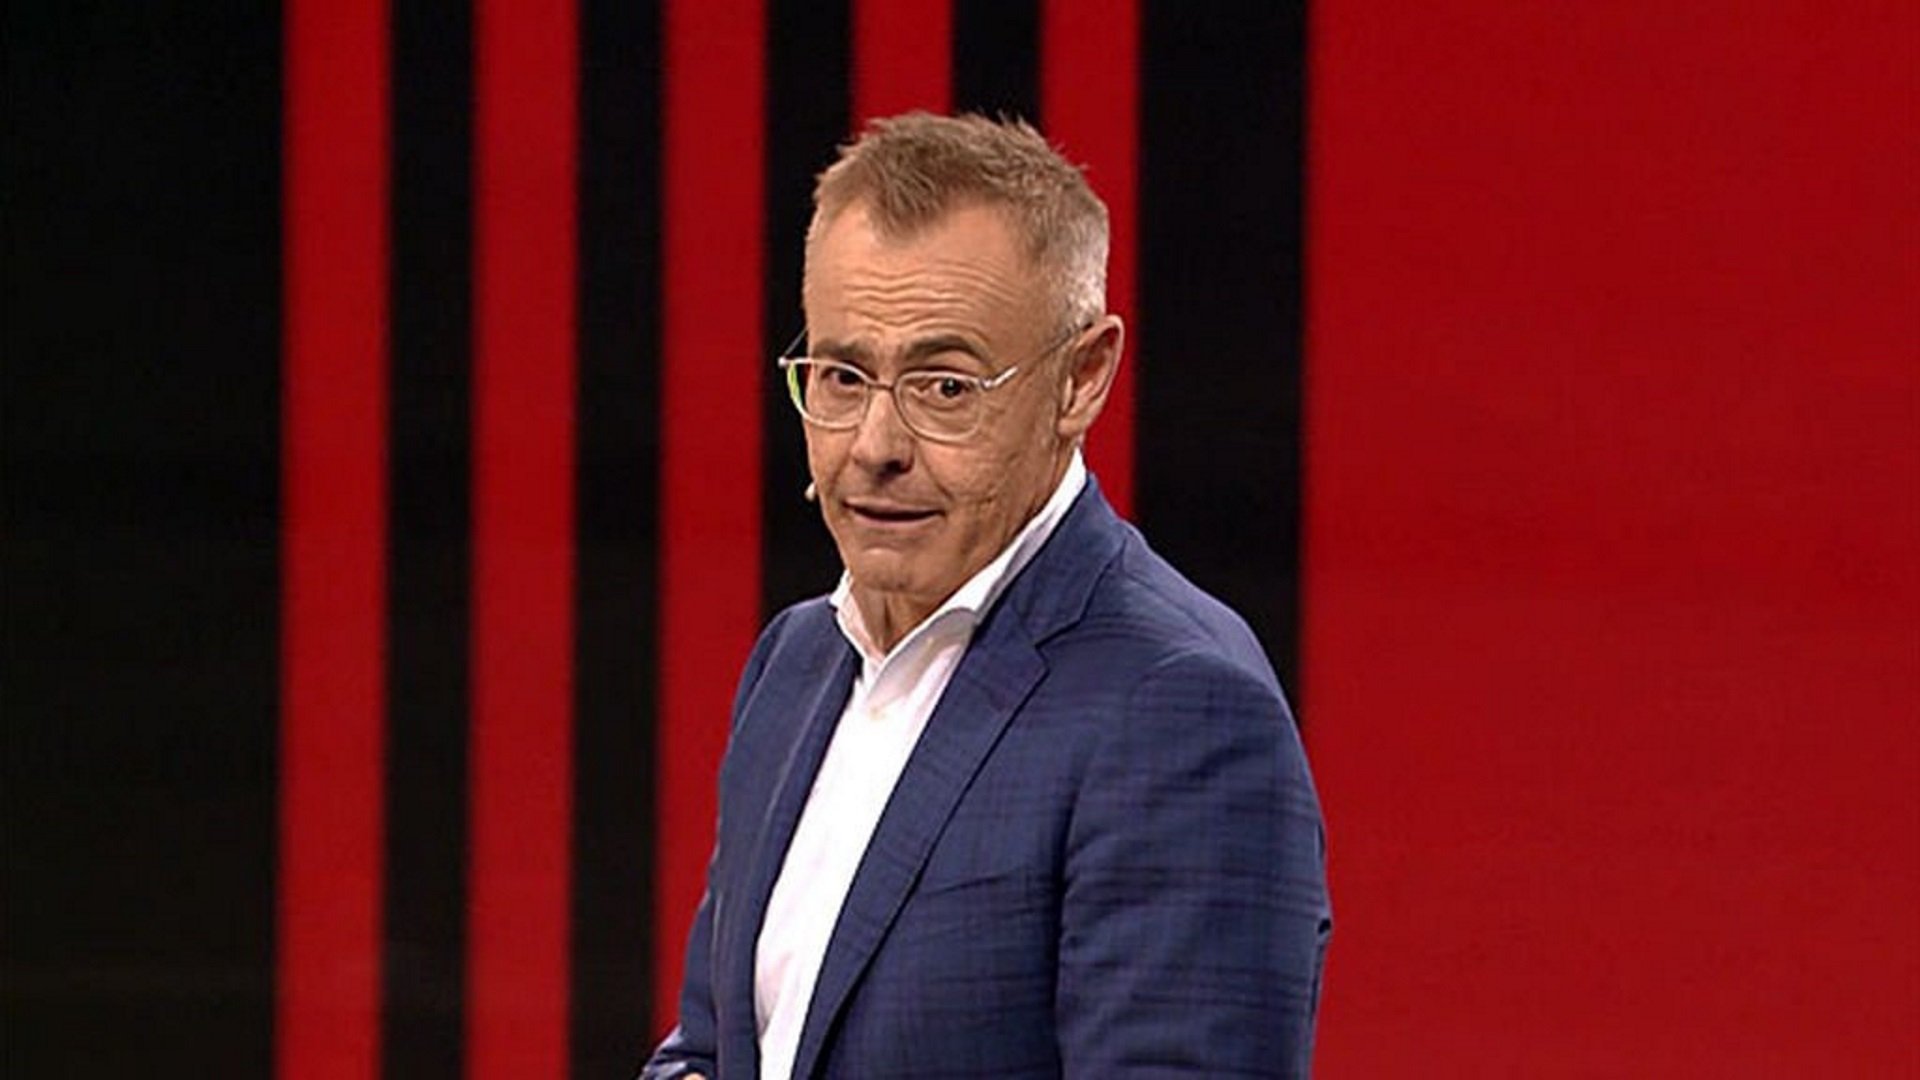 Jordi González carga contra Alba Carrillo: "No la soporto"